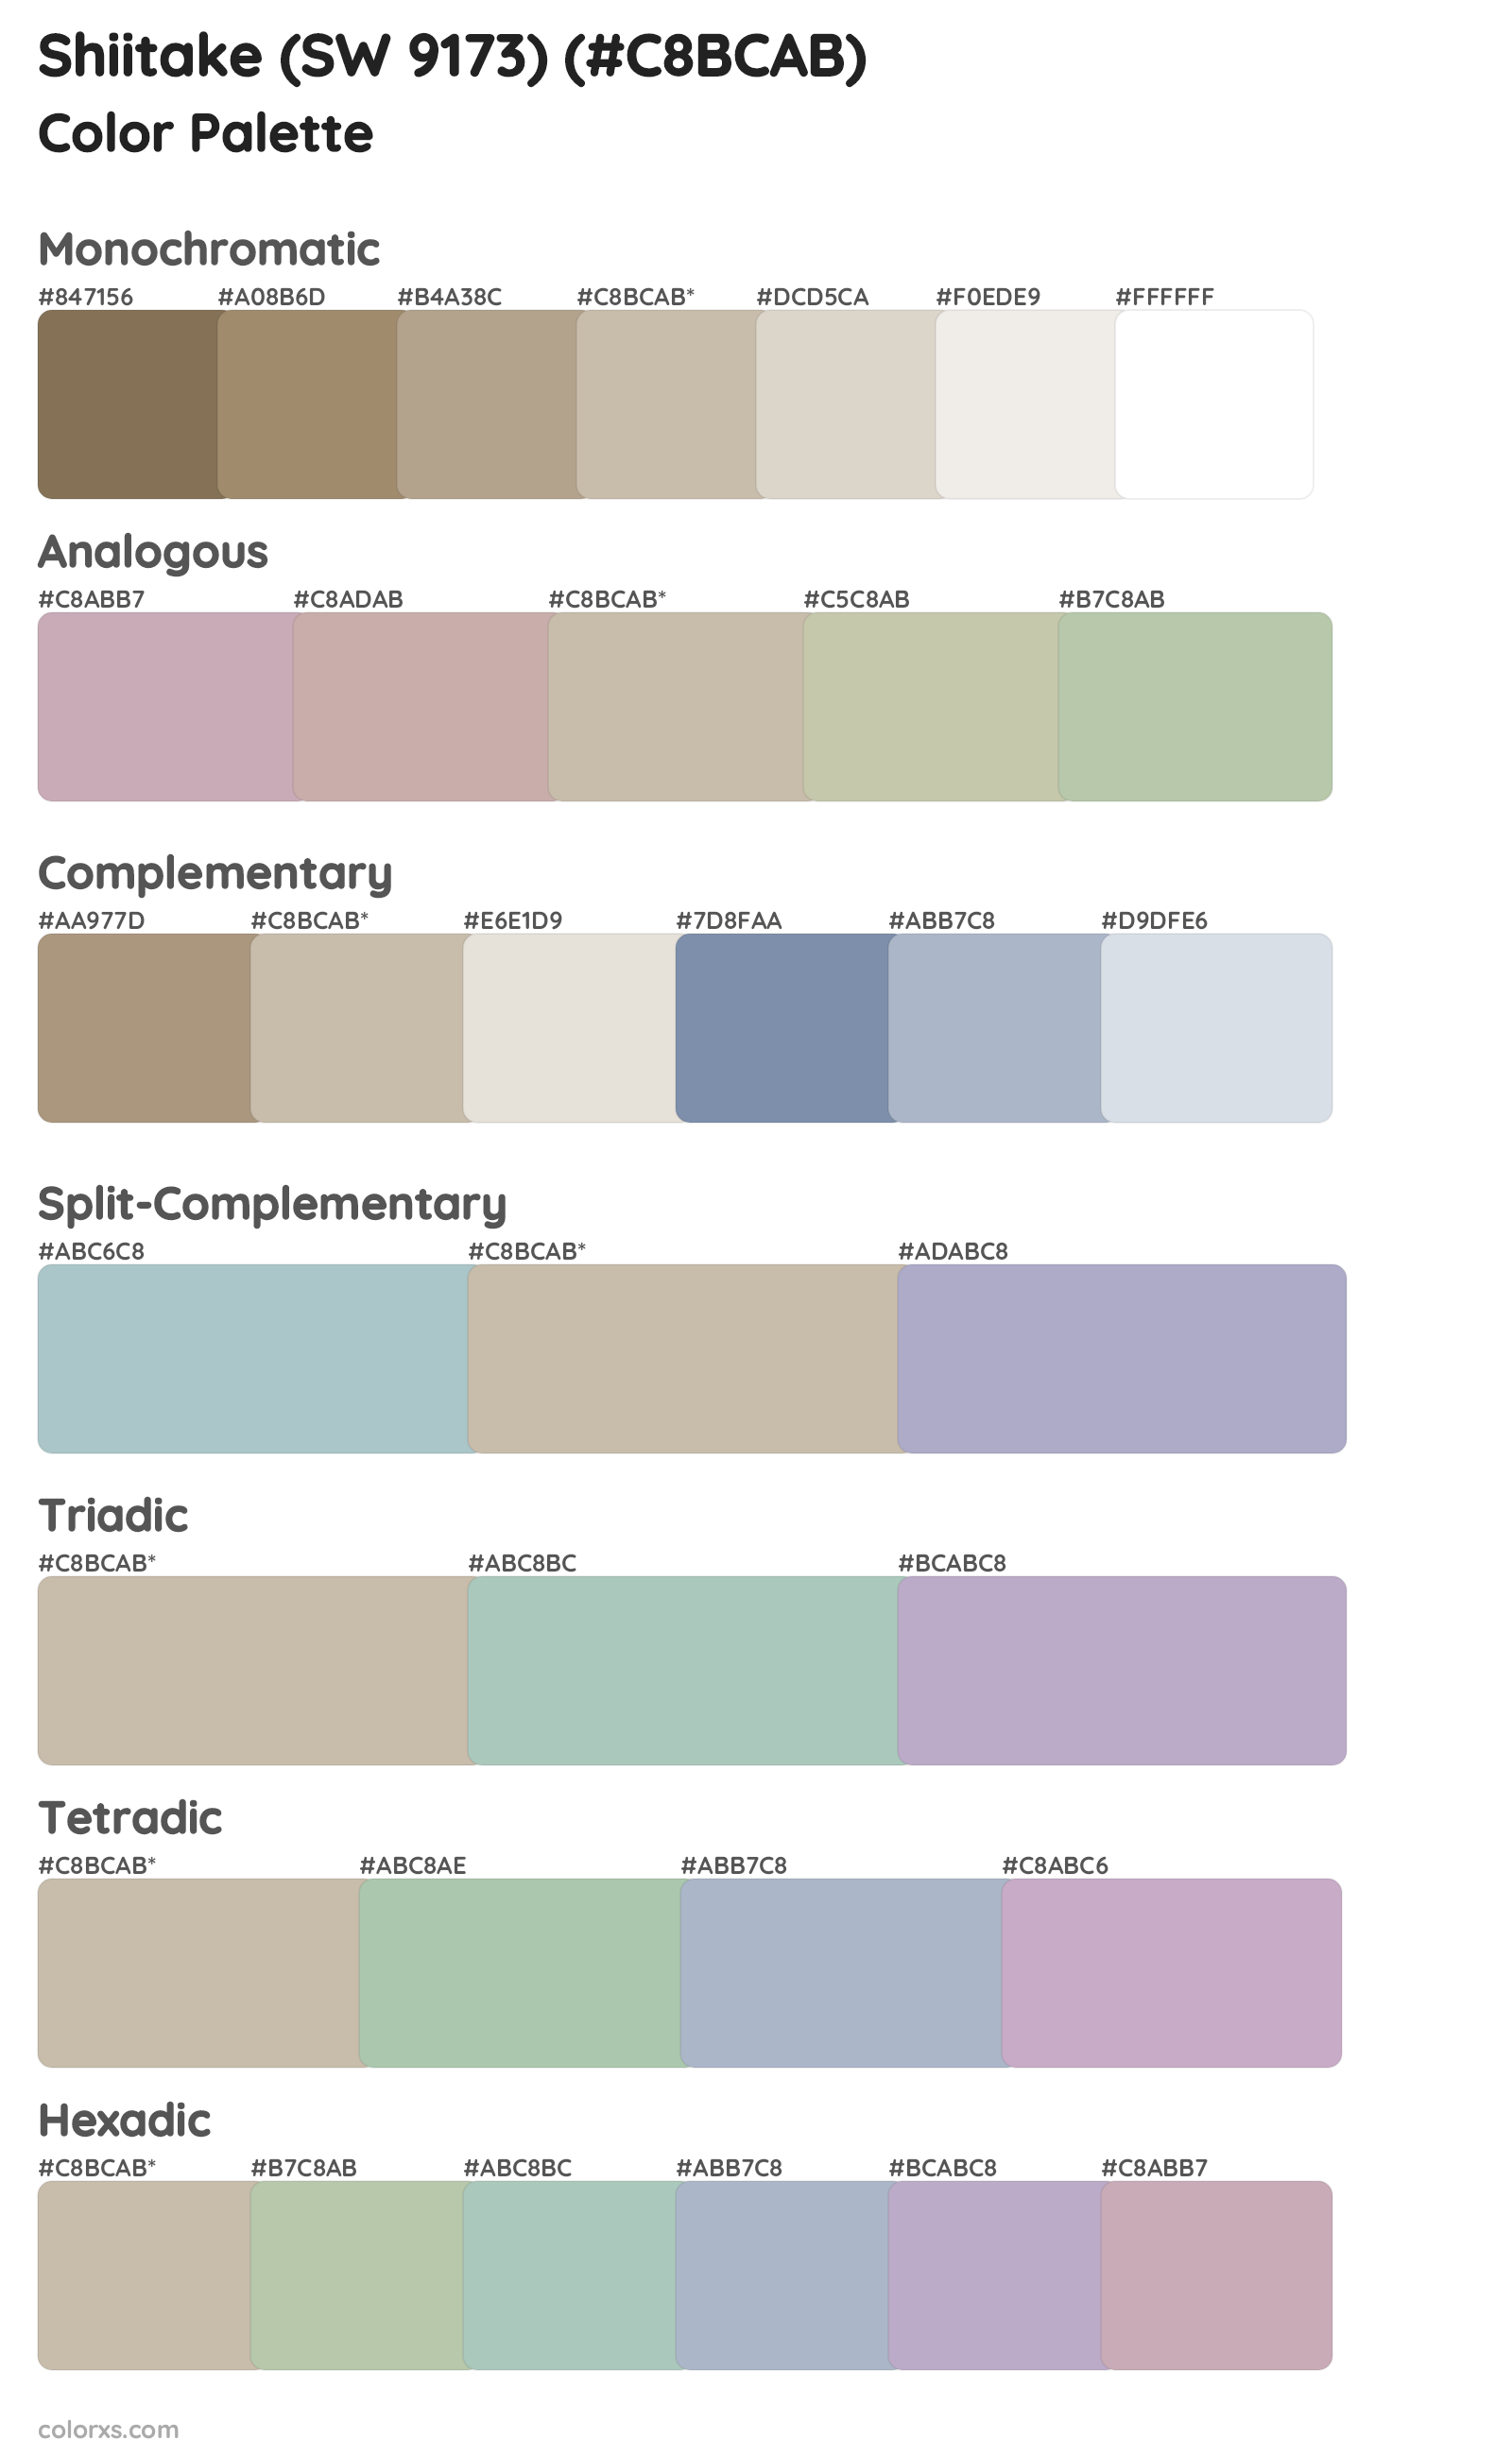 Shiitake (SW 9173) Color Scheme Palettes